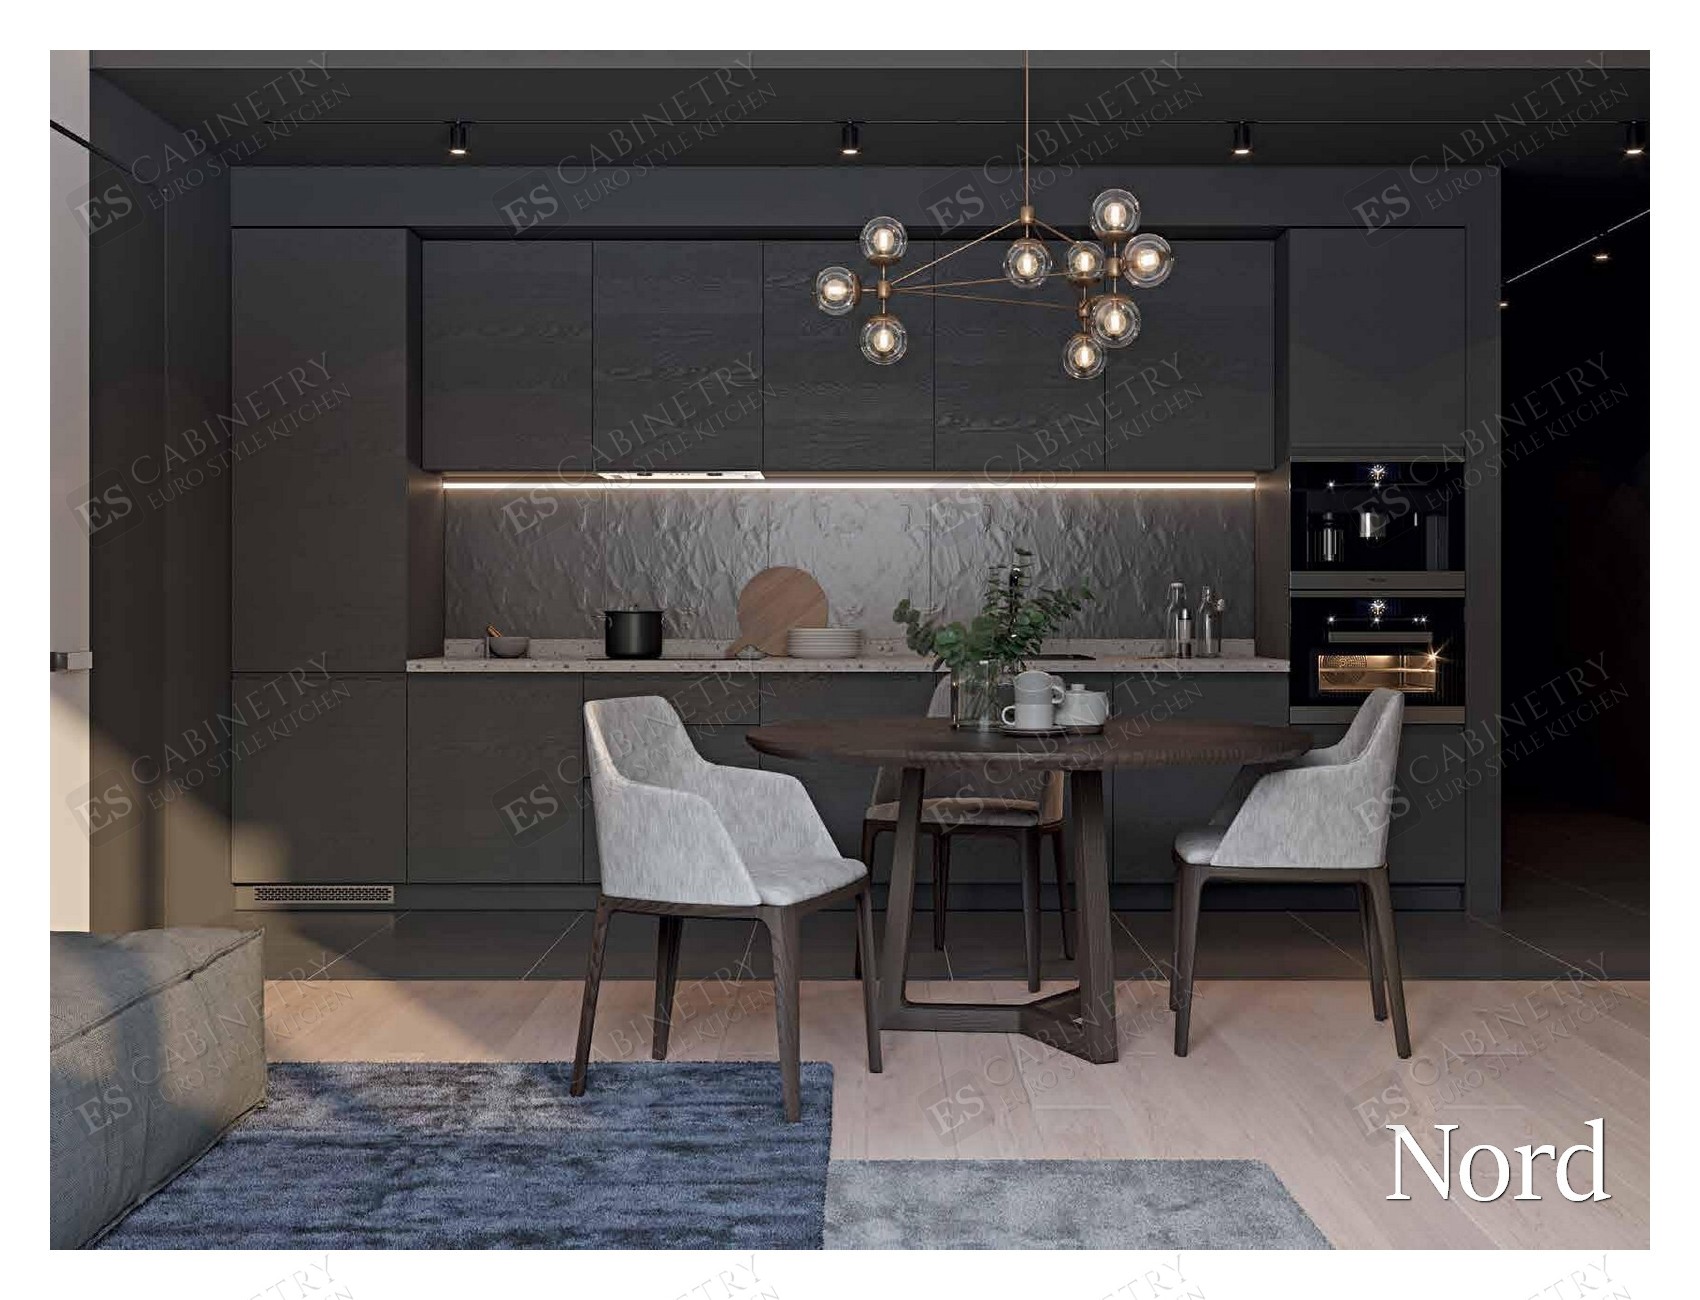 Nord | European design kitchens